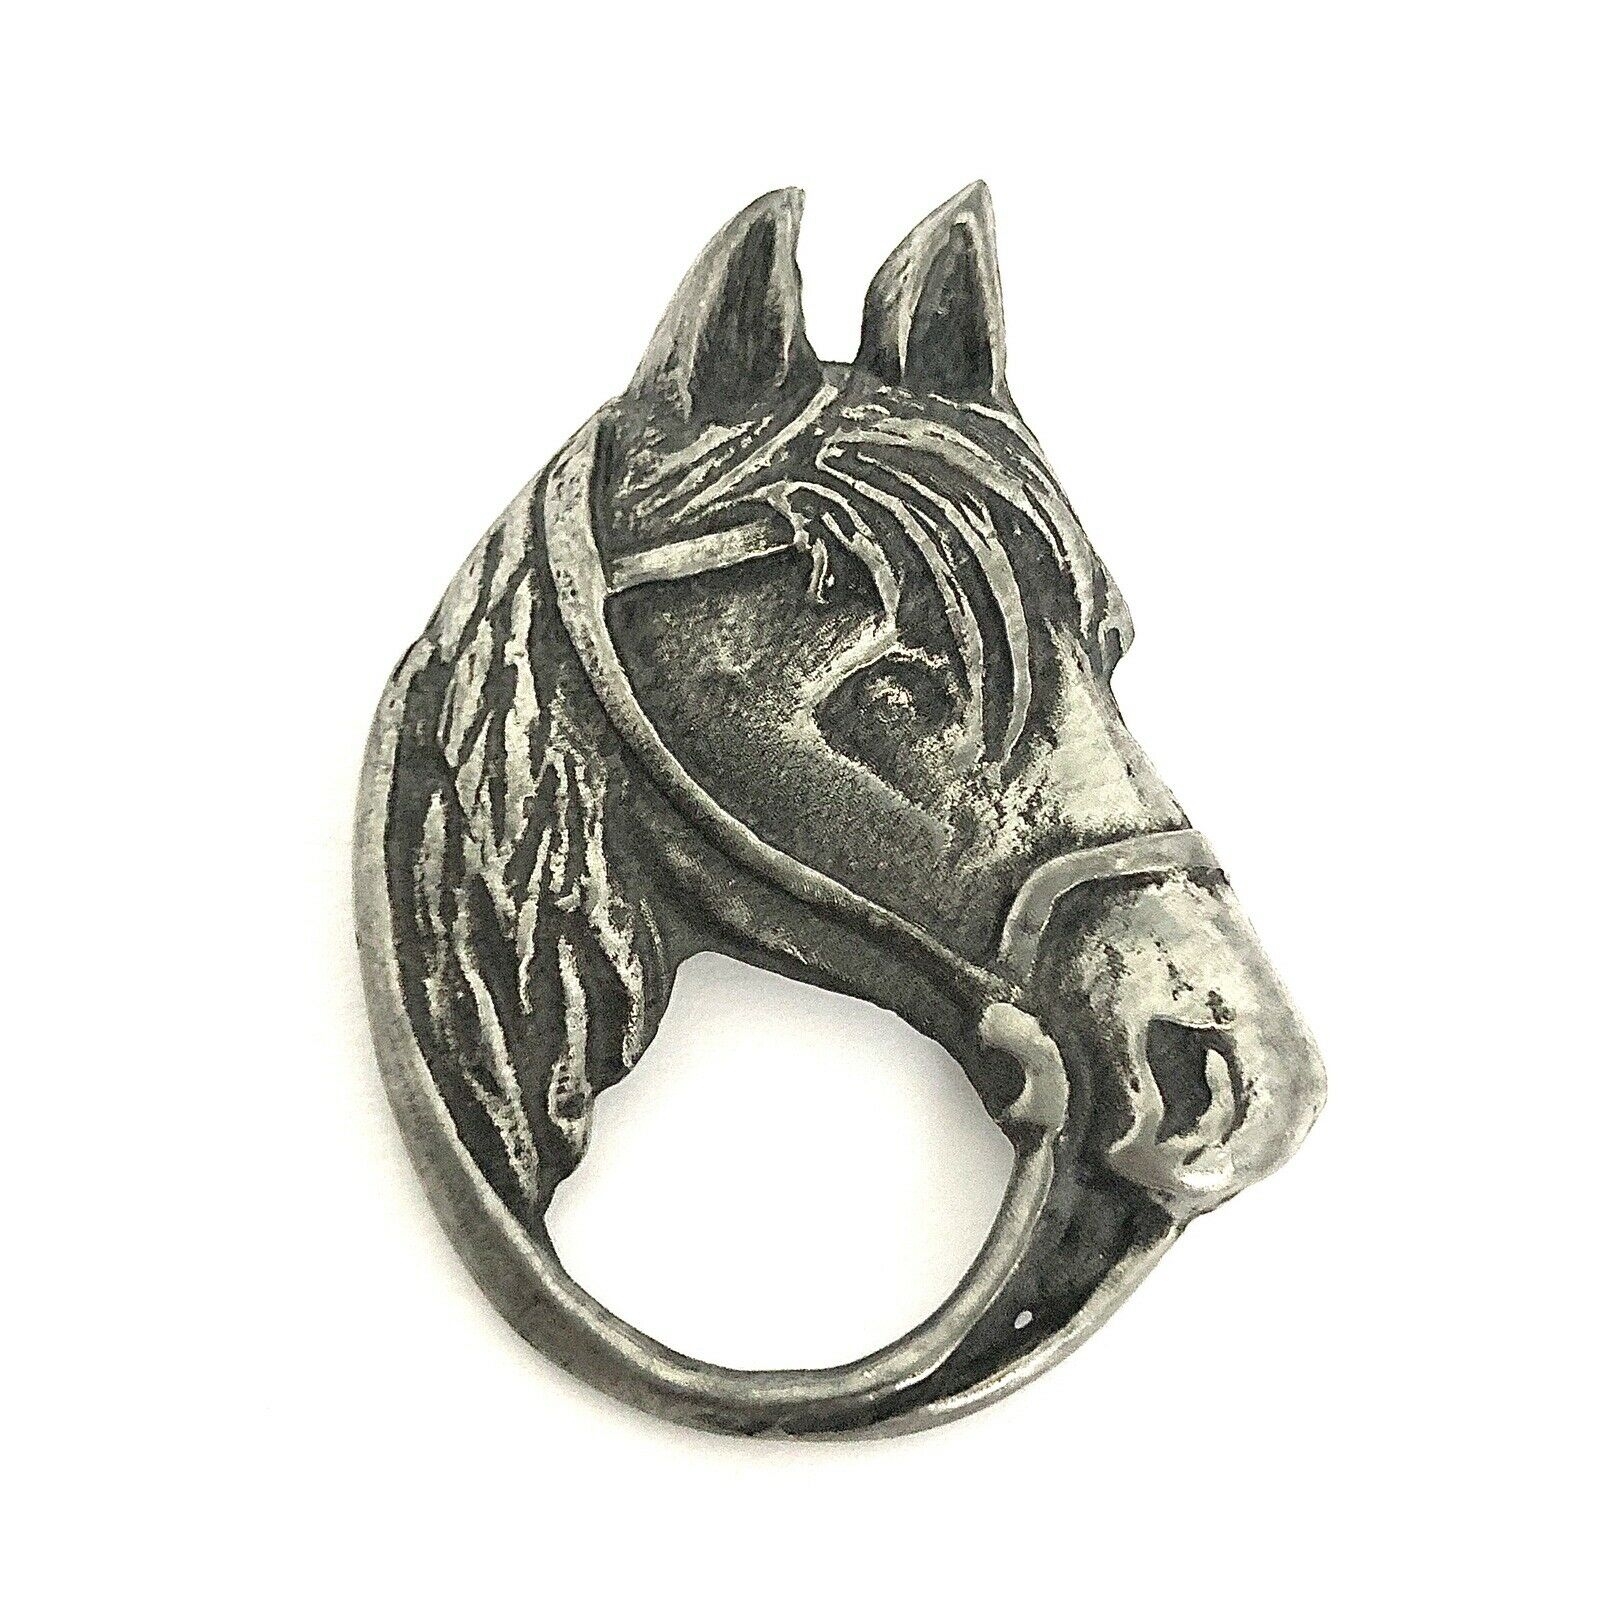 Vintage Horse Brooch Silver Equestrian Pin Head & Neck Wearing Bridle